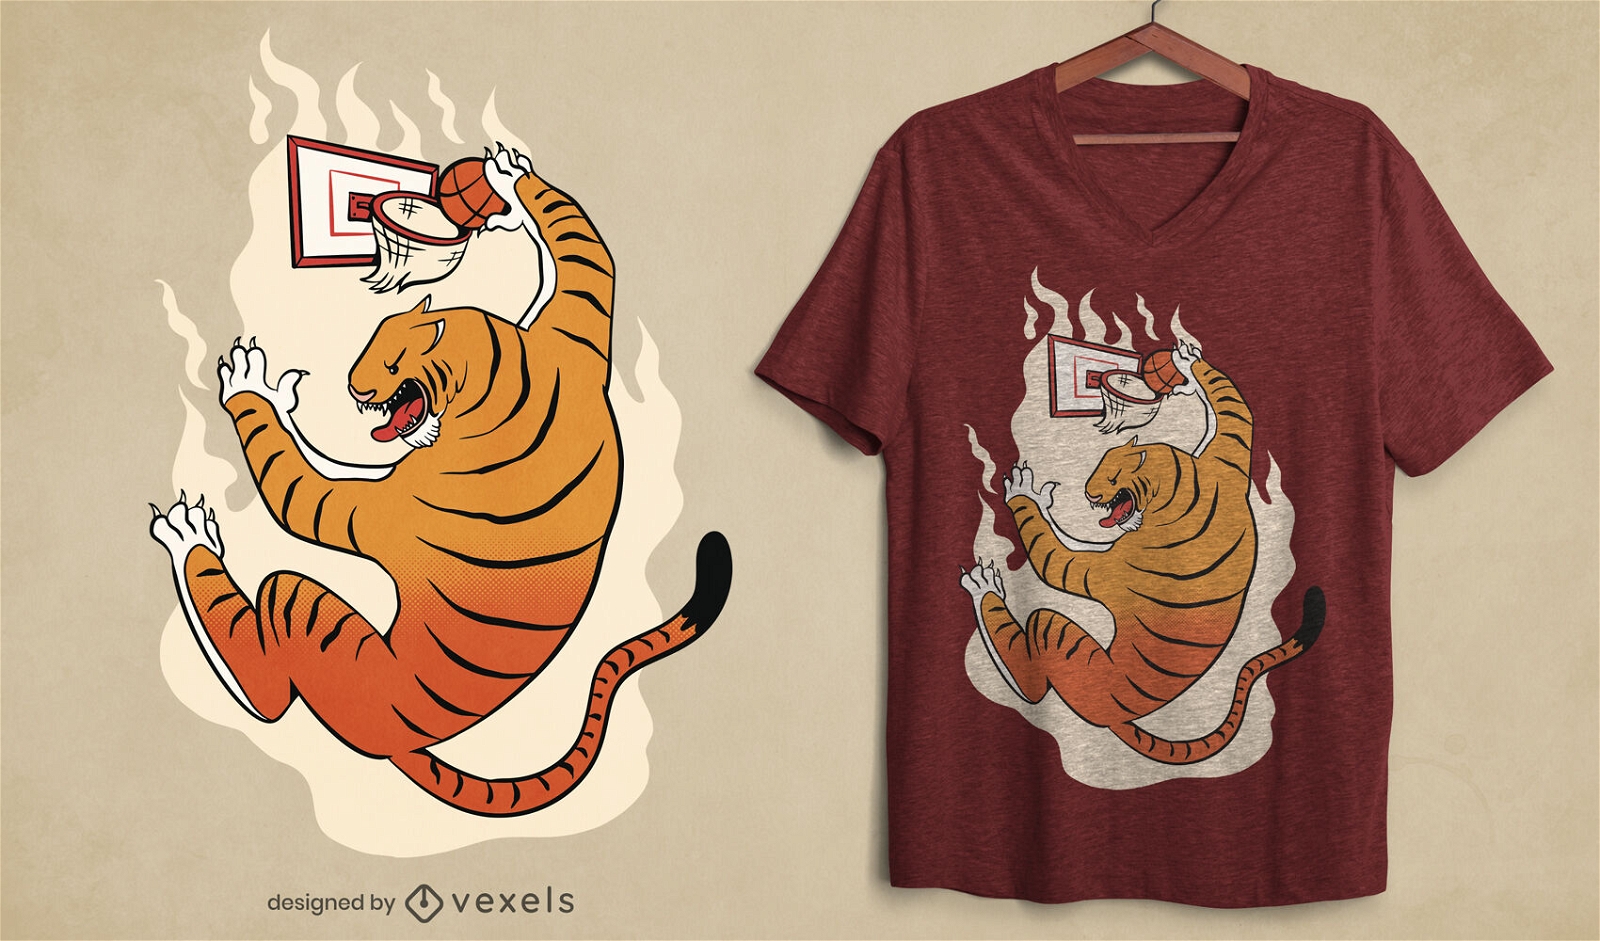 Dise?o de camiseta de tigre animal jugando baloncesto.